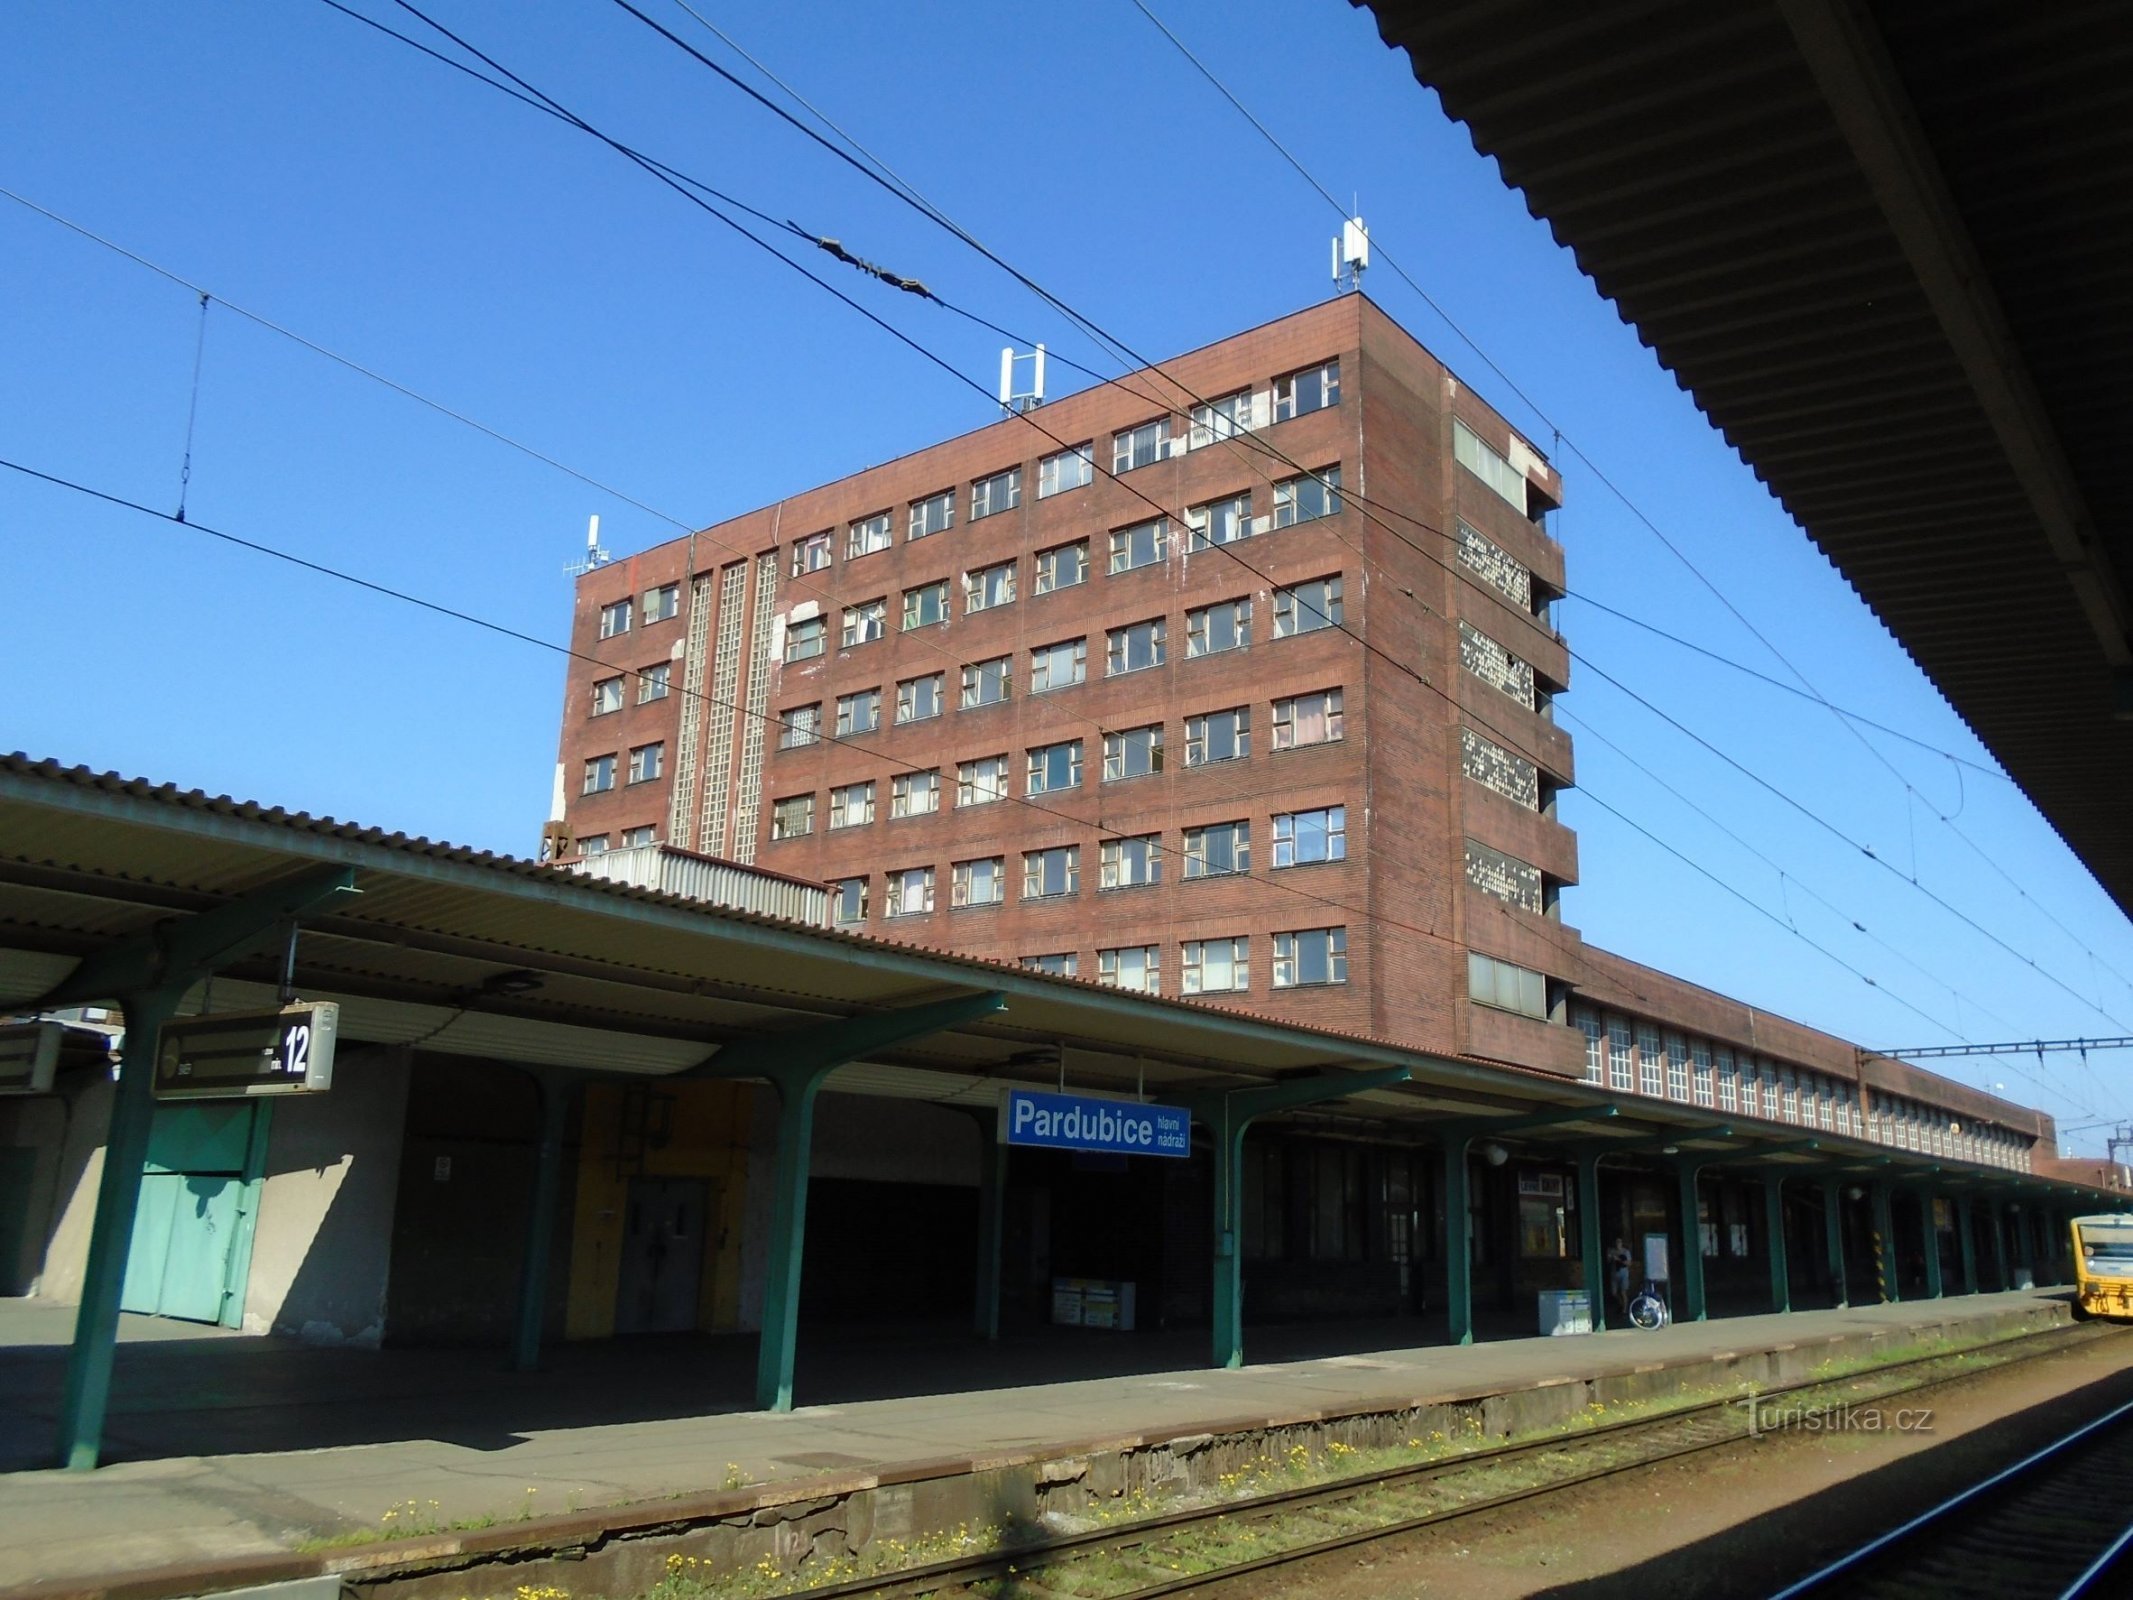 Centraal station (Pardubice, 18.4.2018/XNUMX/XNUMX)